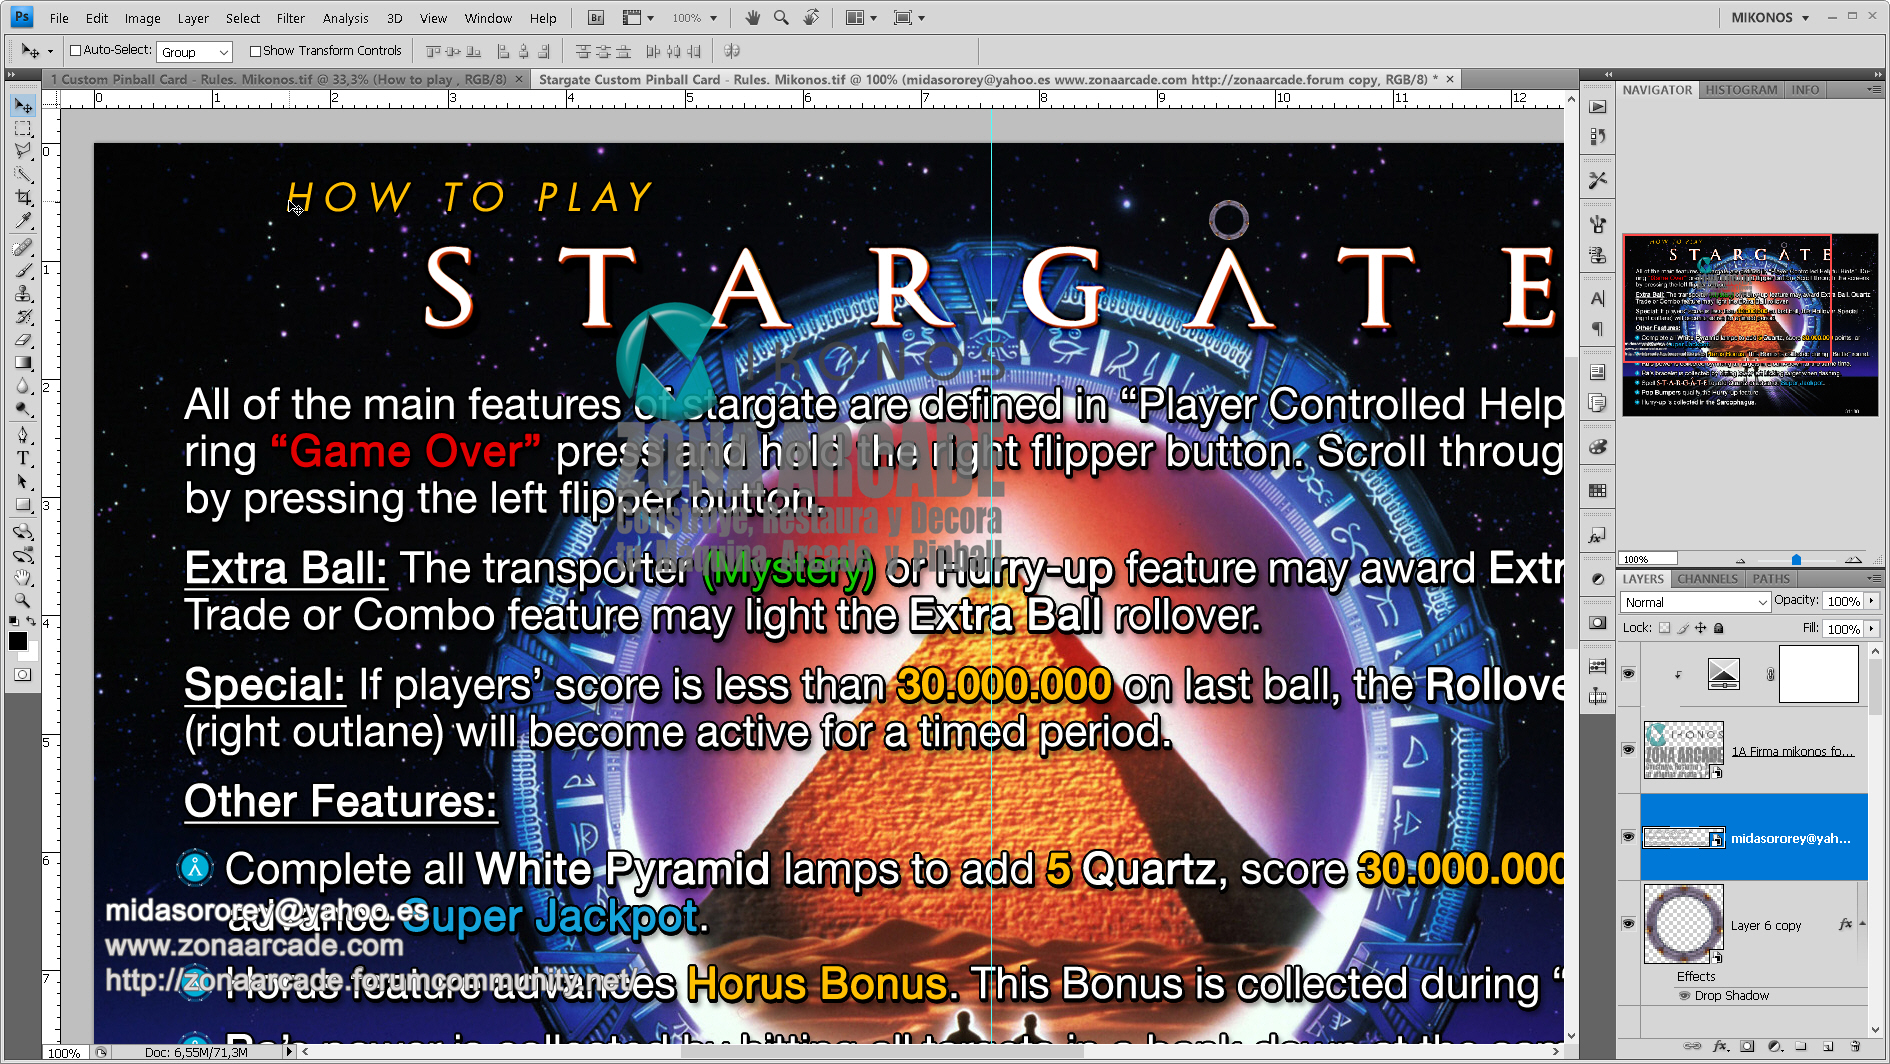 Stargate Pinball Card Customized - Rules. Mikonos1